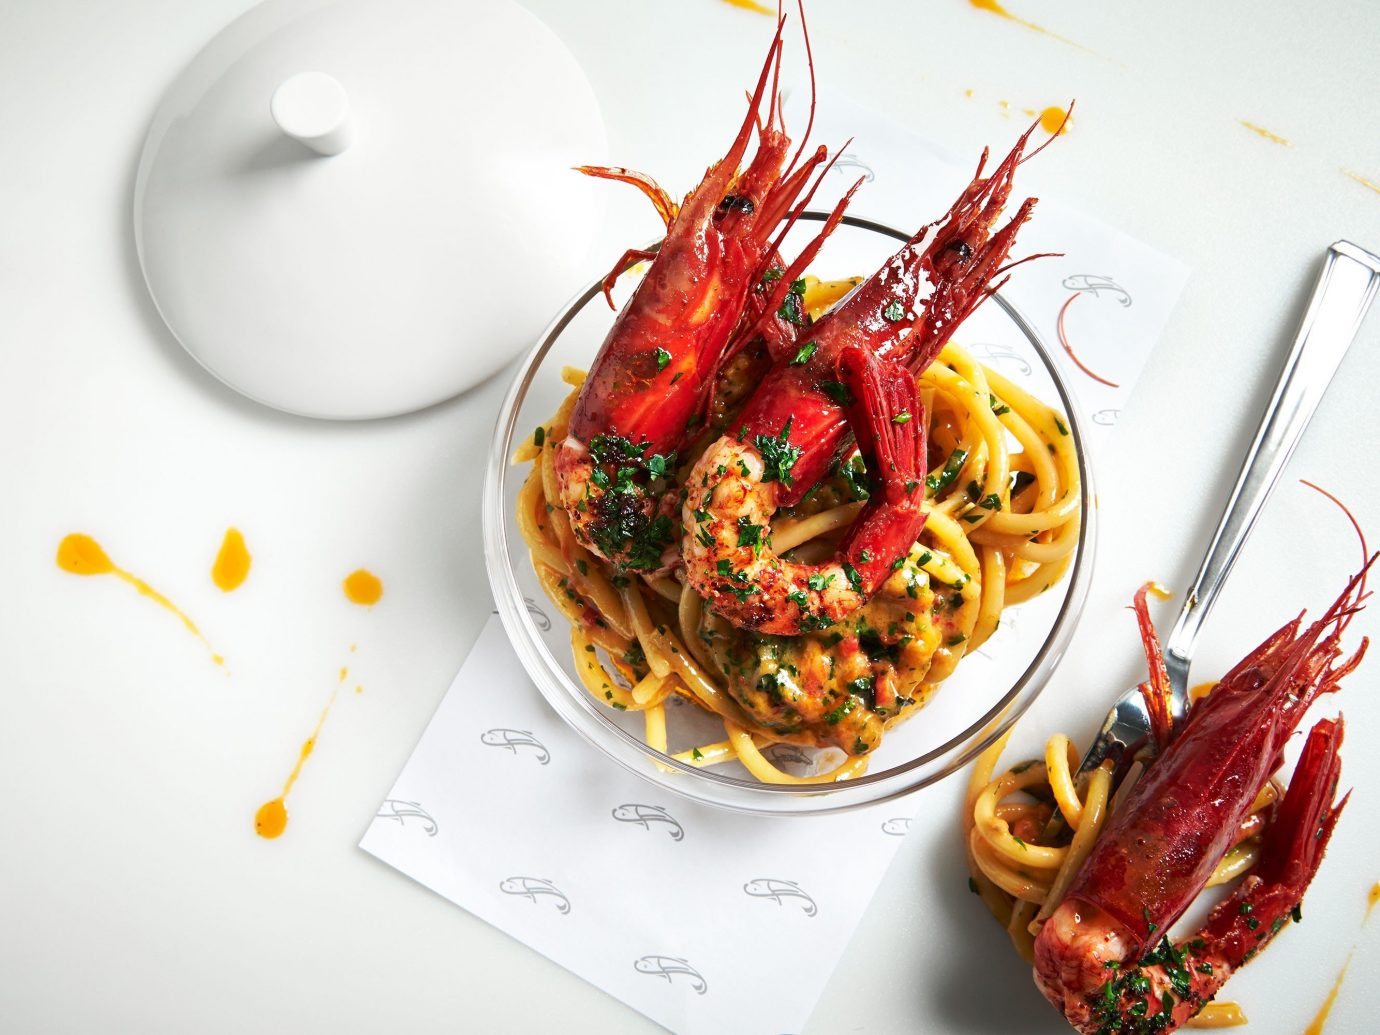 Food + Drink food plate dish cuisine meal produce spaghetti vegetable sense Seafood italian food european food crayfish arranged piece de resistance